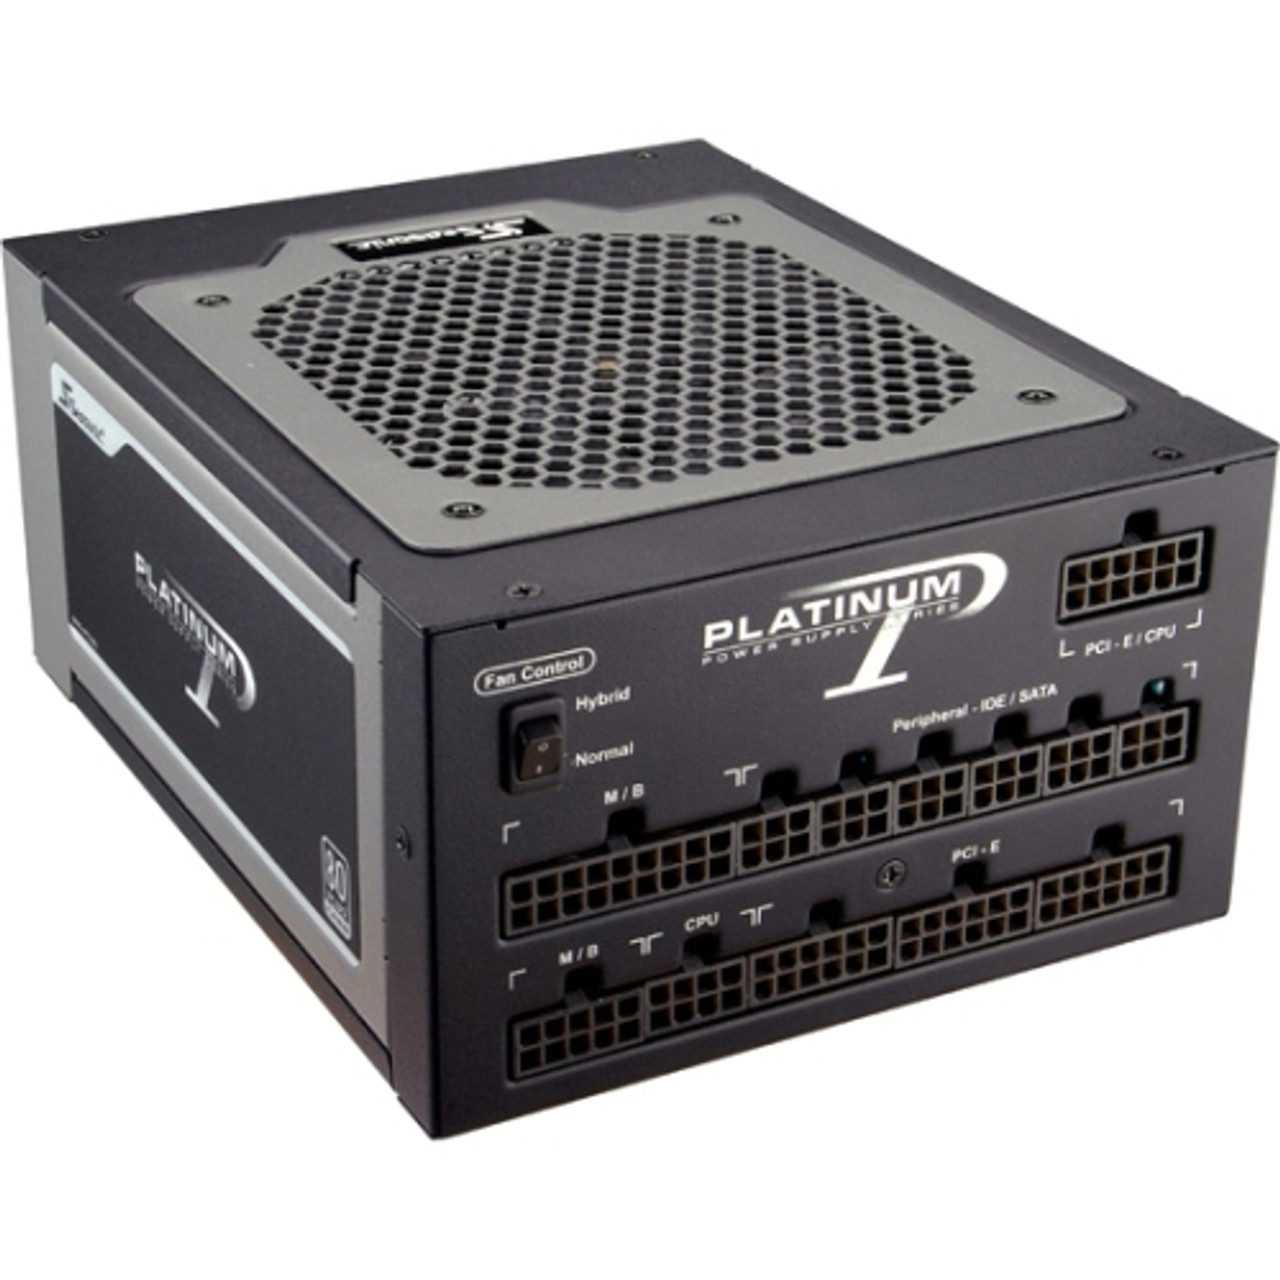 SS-860XP Seasonic Platinum-860 860-Watts ATX12V & EPS12V Power Supply